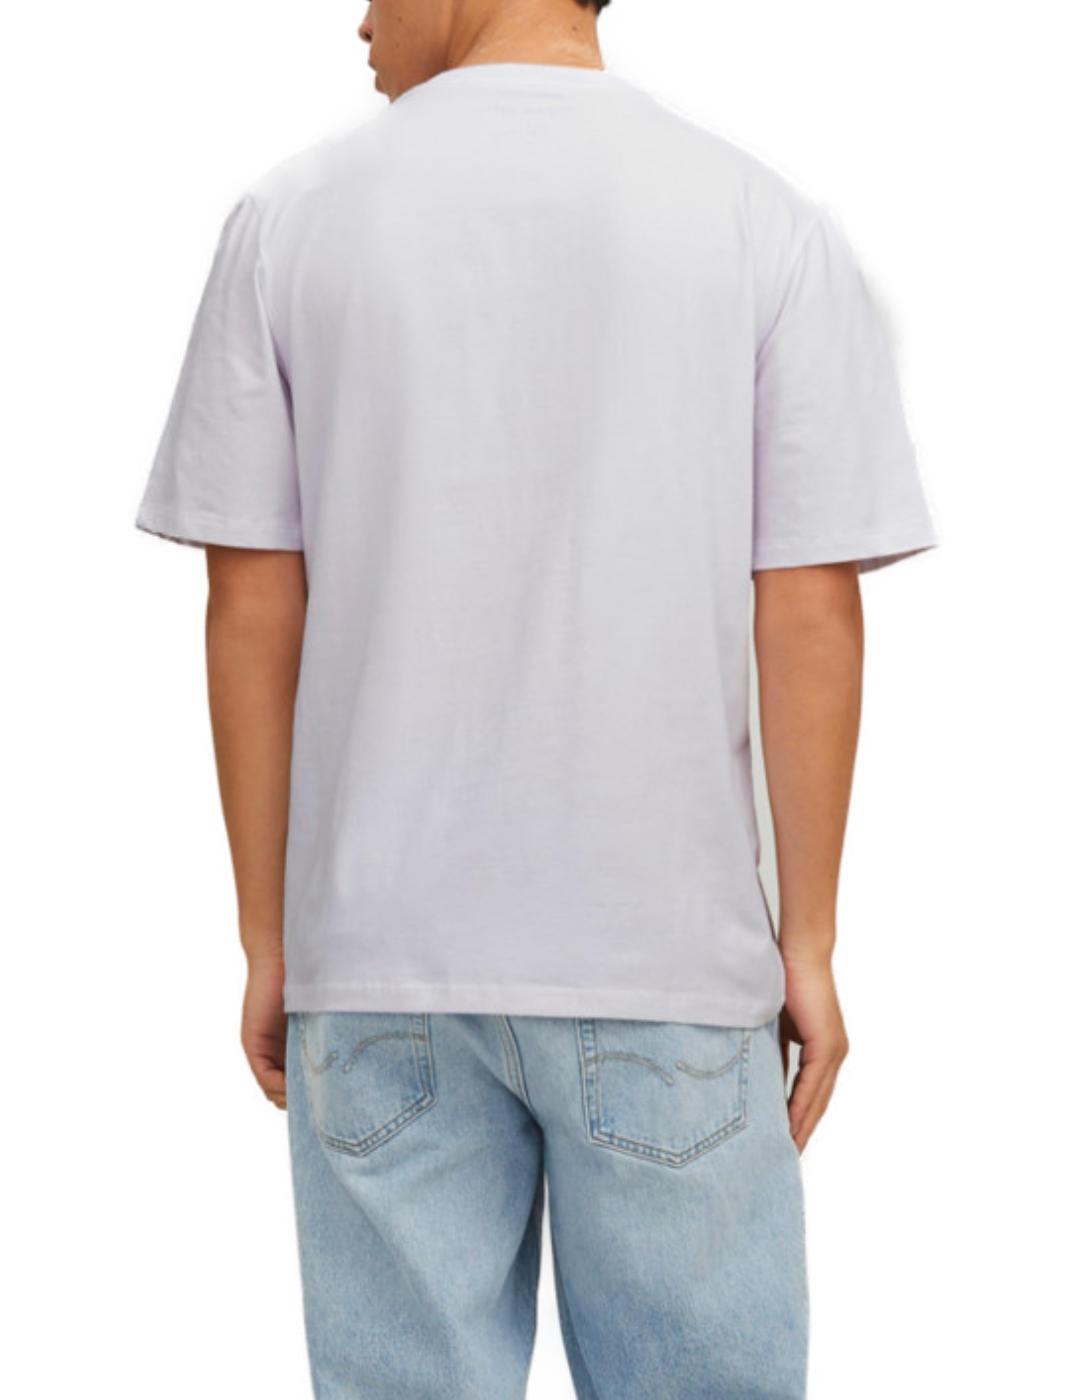 Camiseta Jack&Jones Joshua blanca de manga corta para hombre